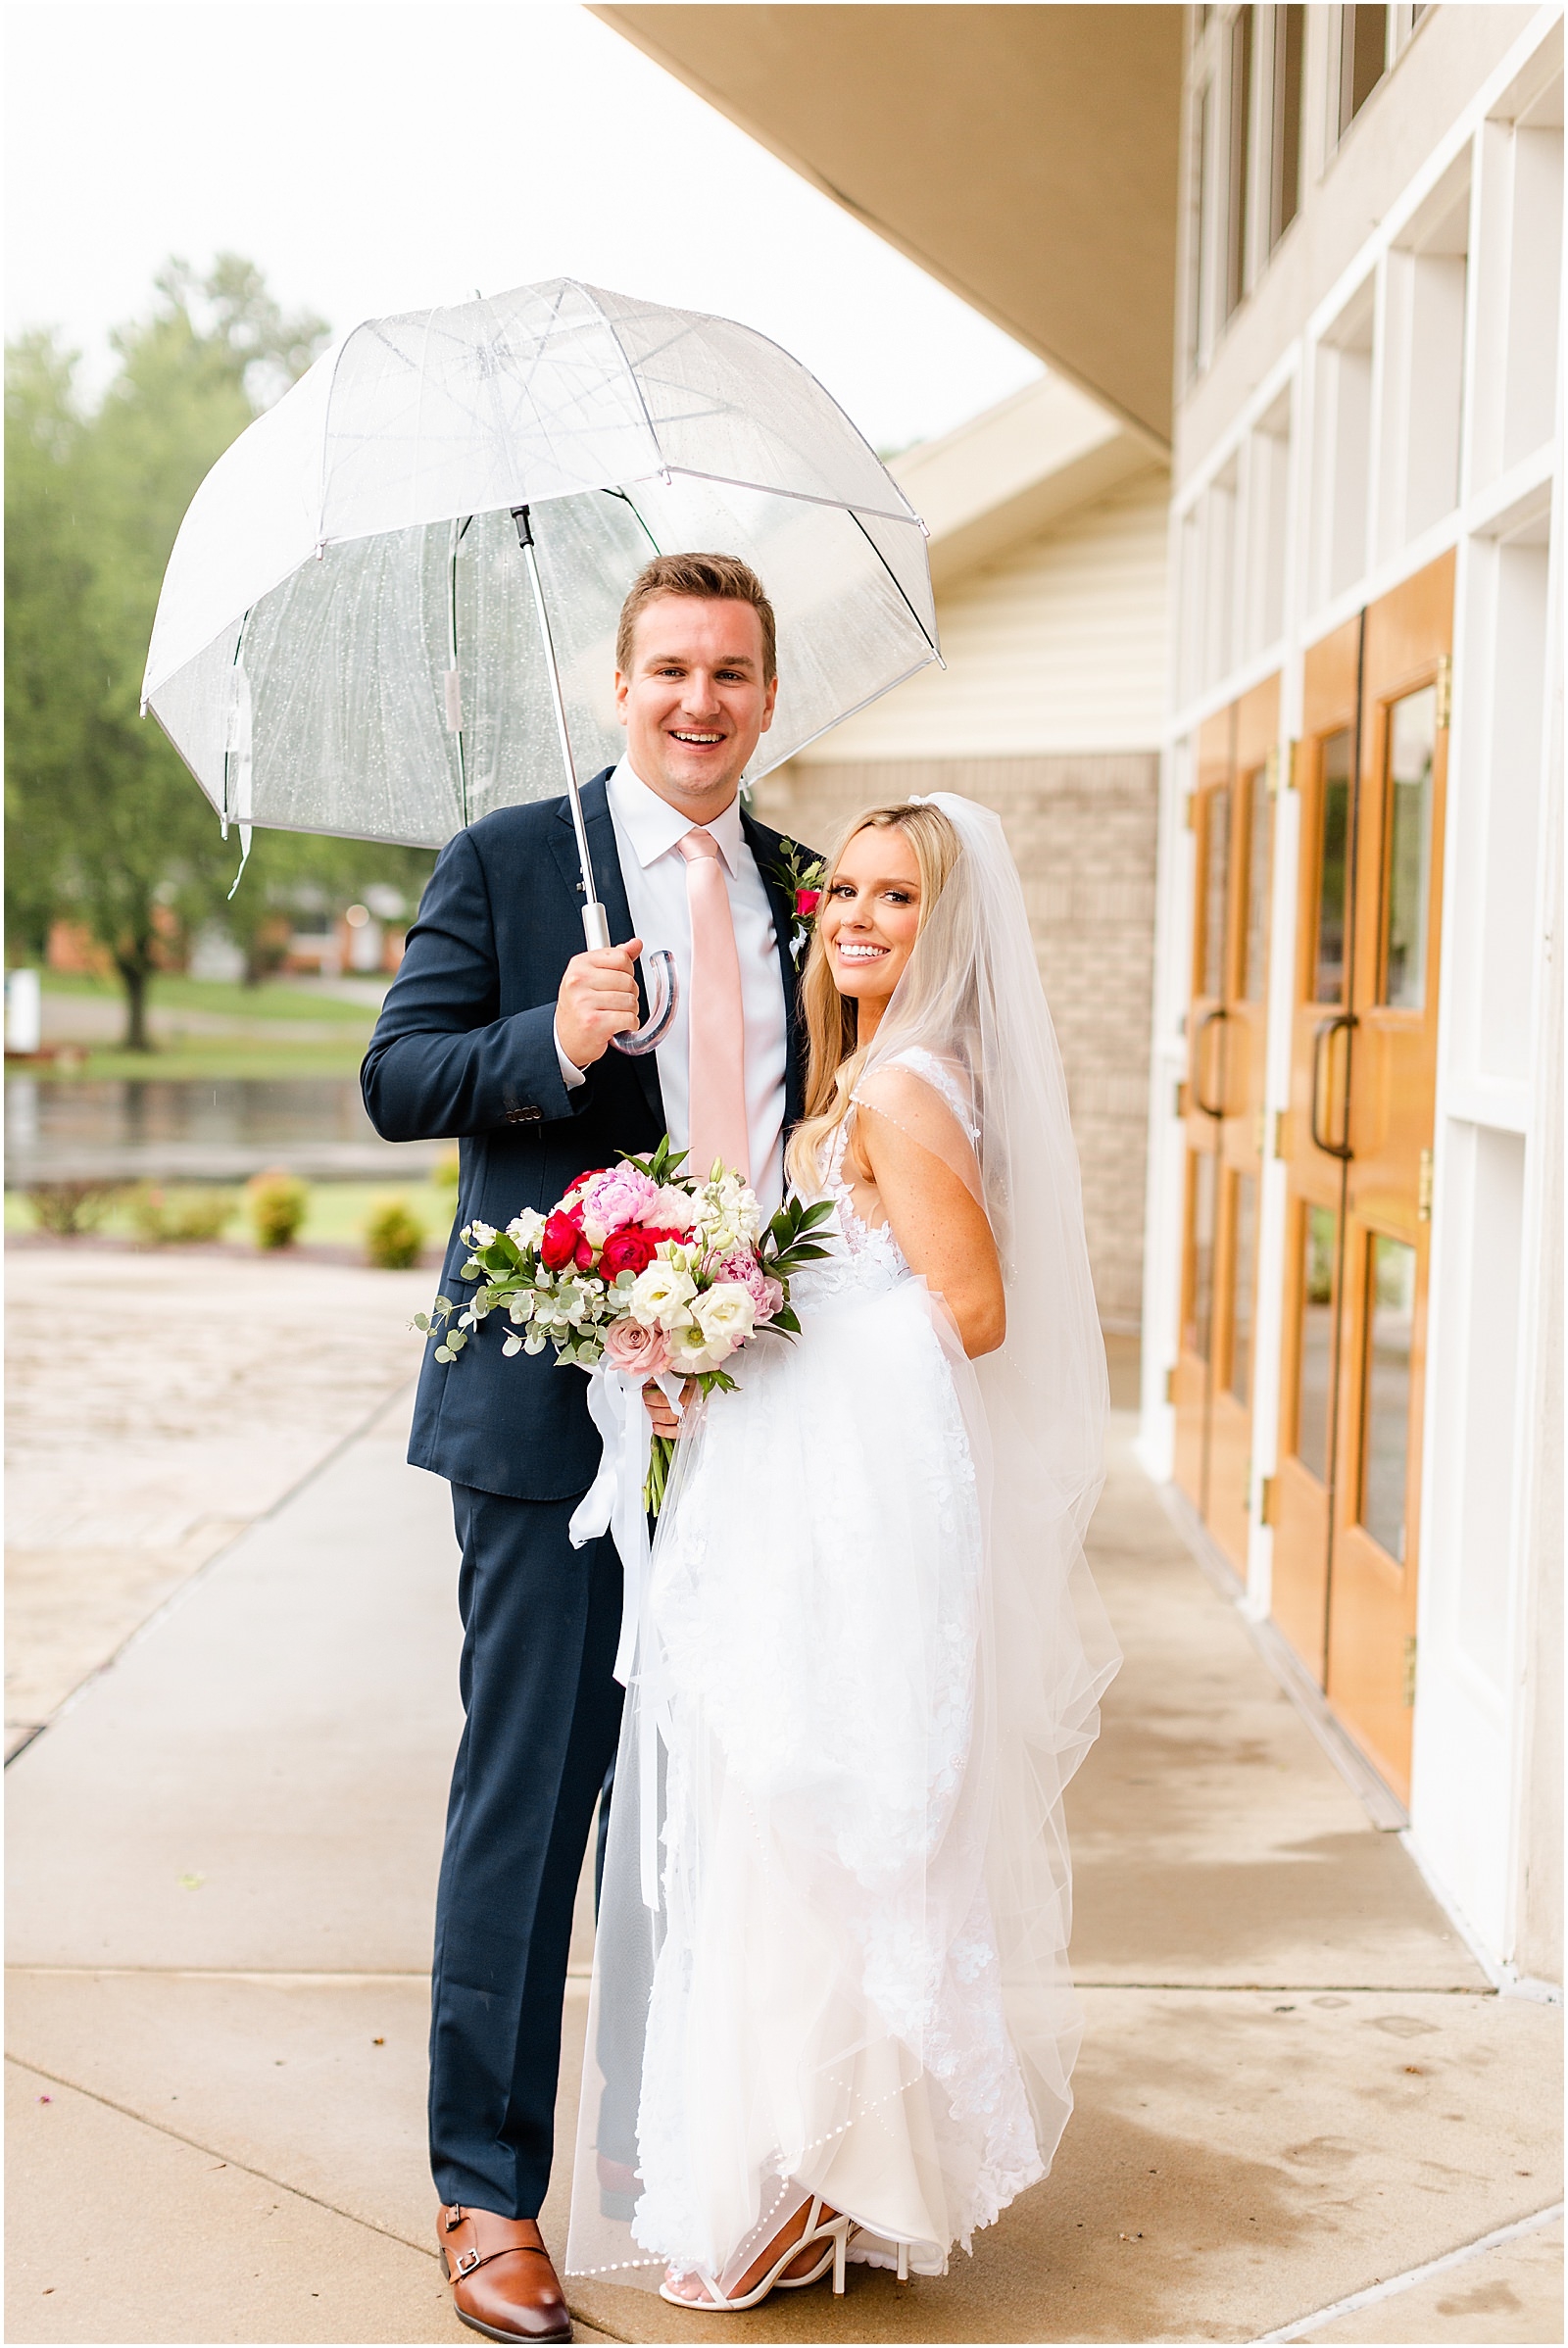 An Evansville Country Club Wedding | Madison and Christiaan | Bret and Brandie | Evansville Photographers | @bretandbrandie-0139.jpg